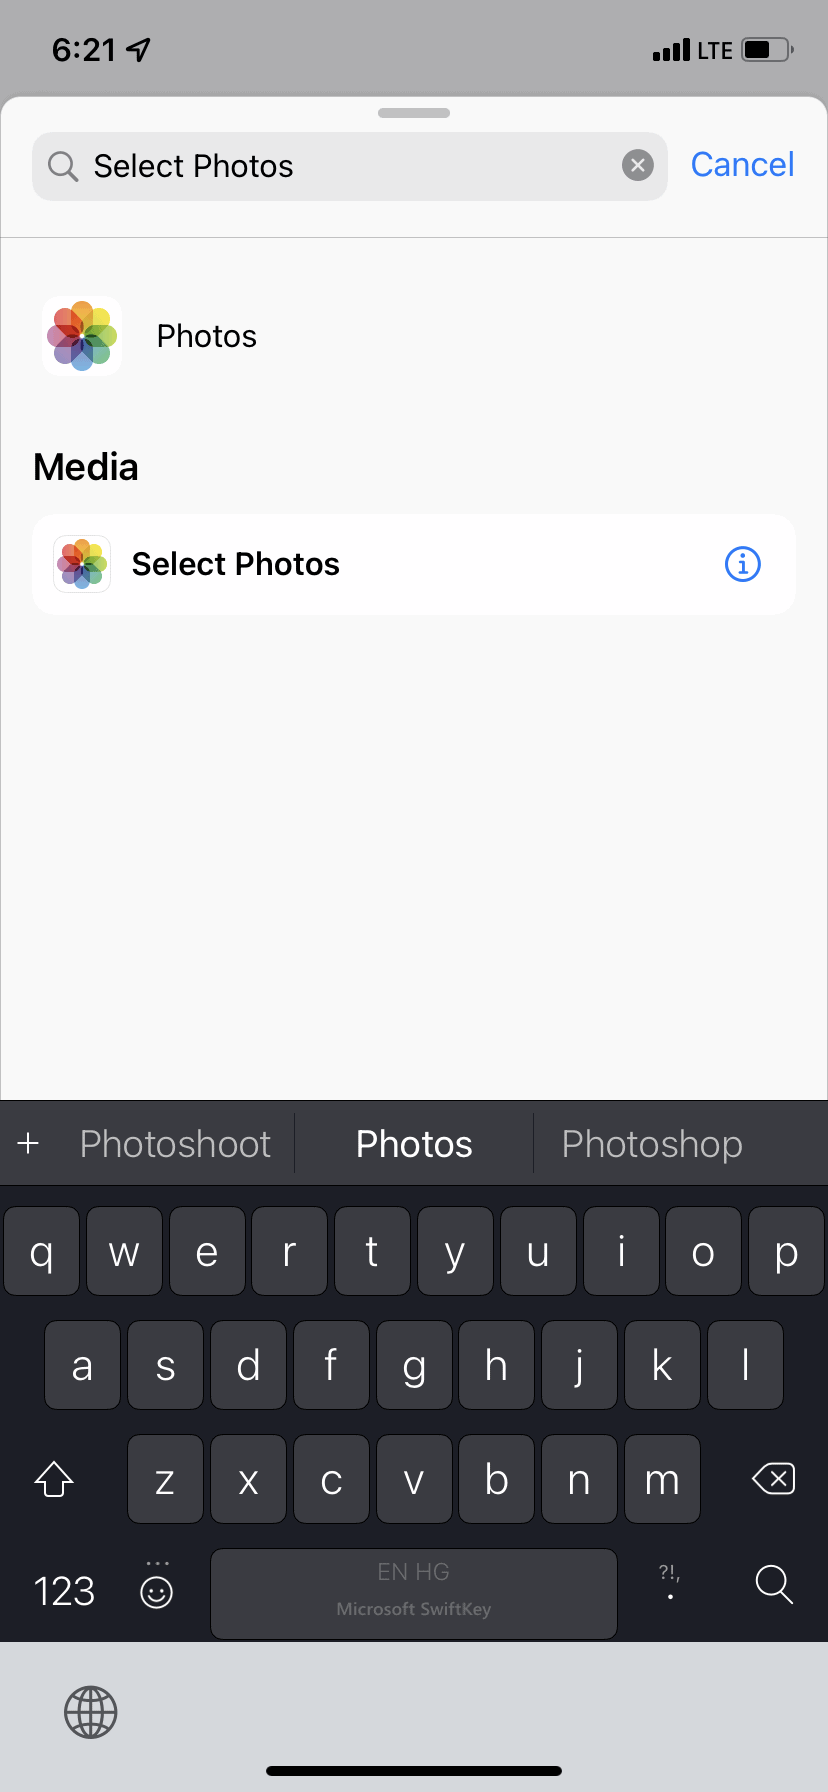 Select Photos Action in iOS Shortcuts app